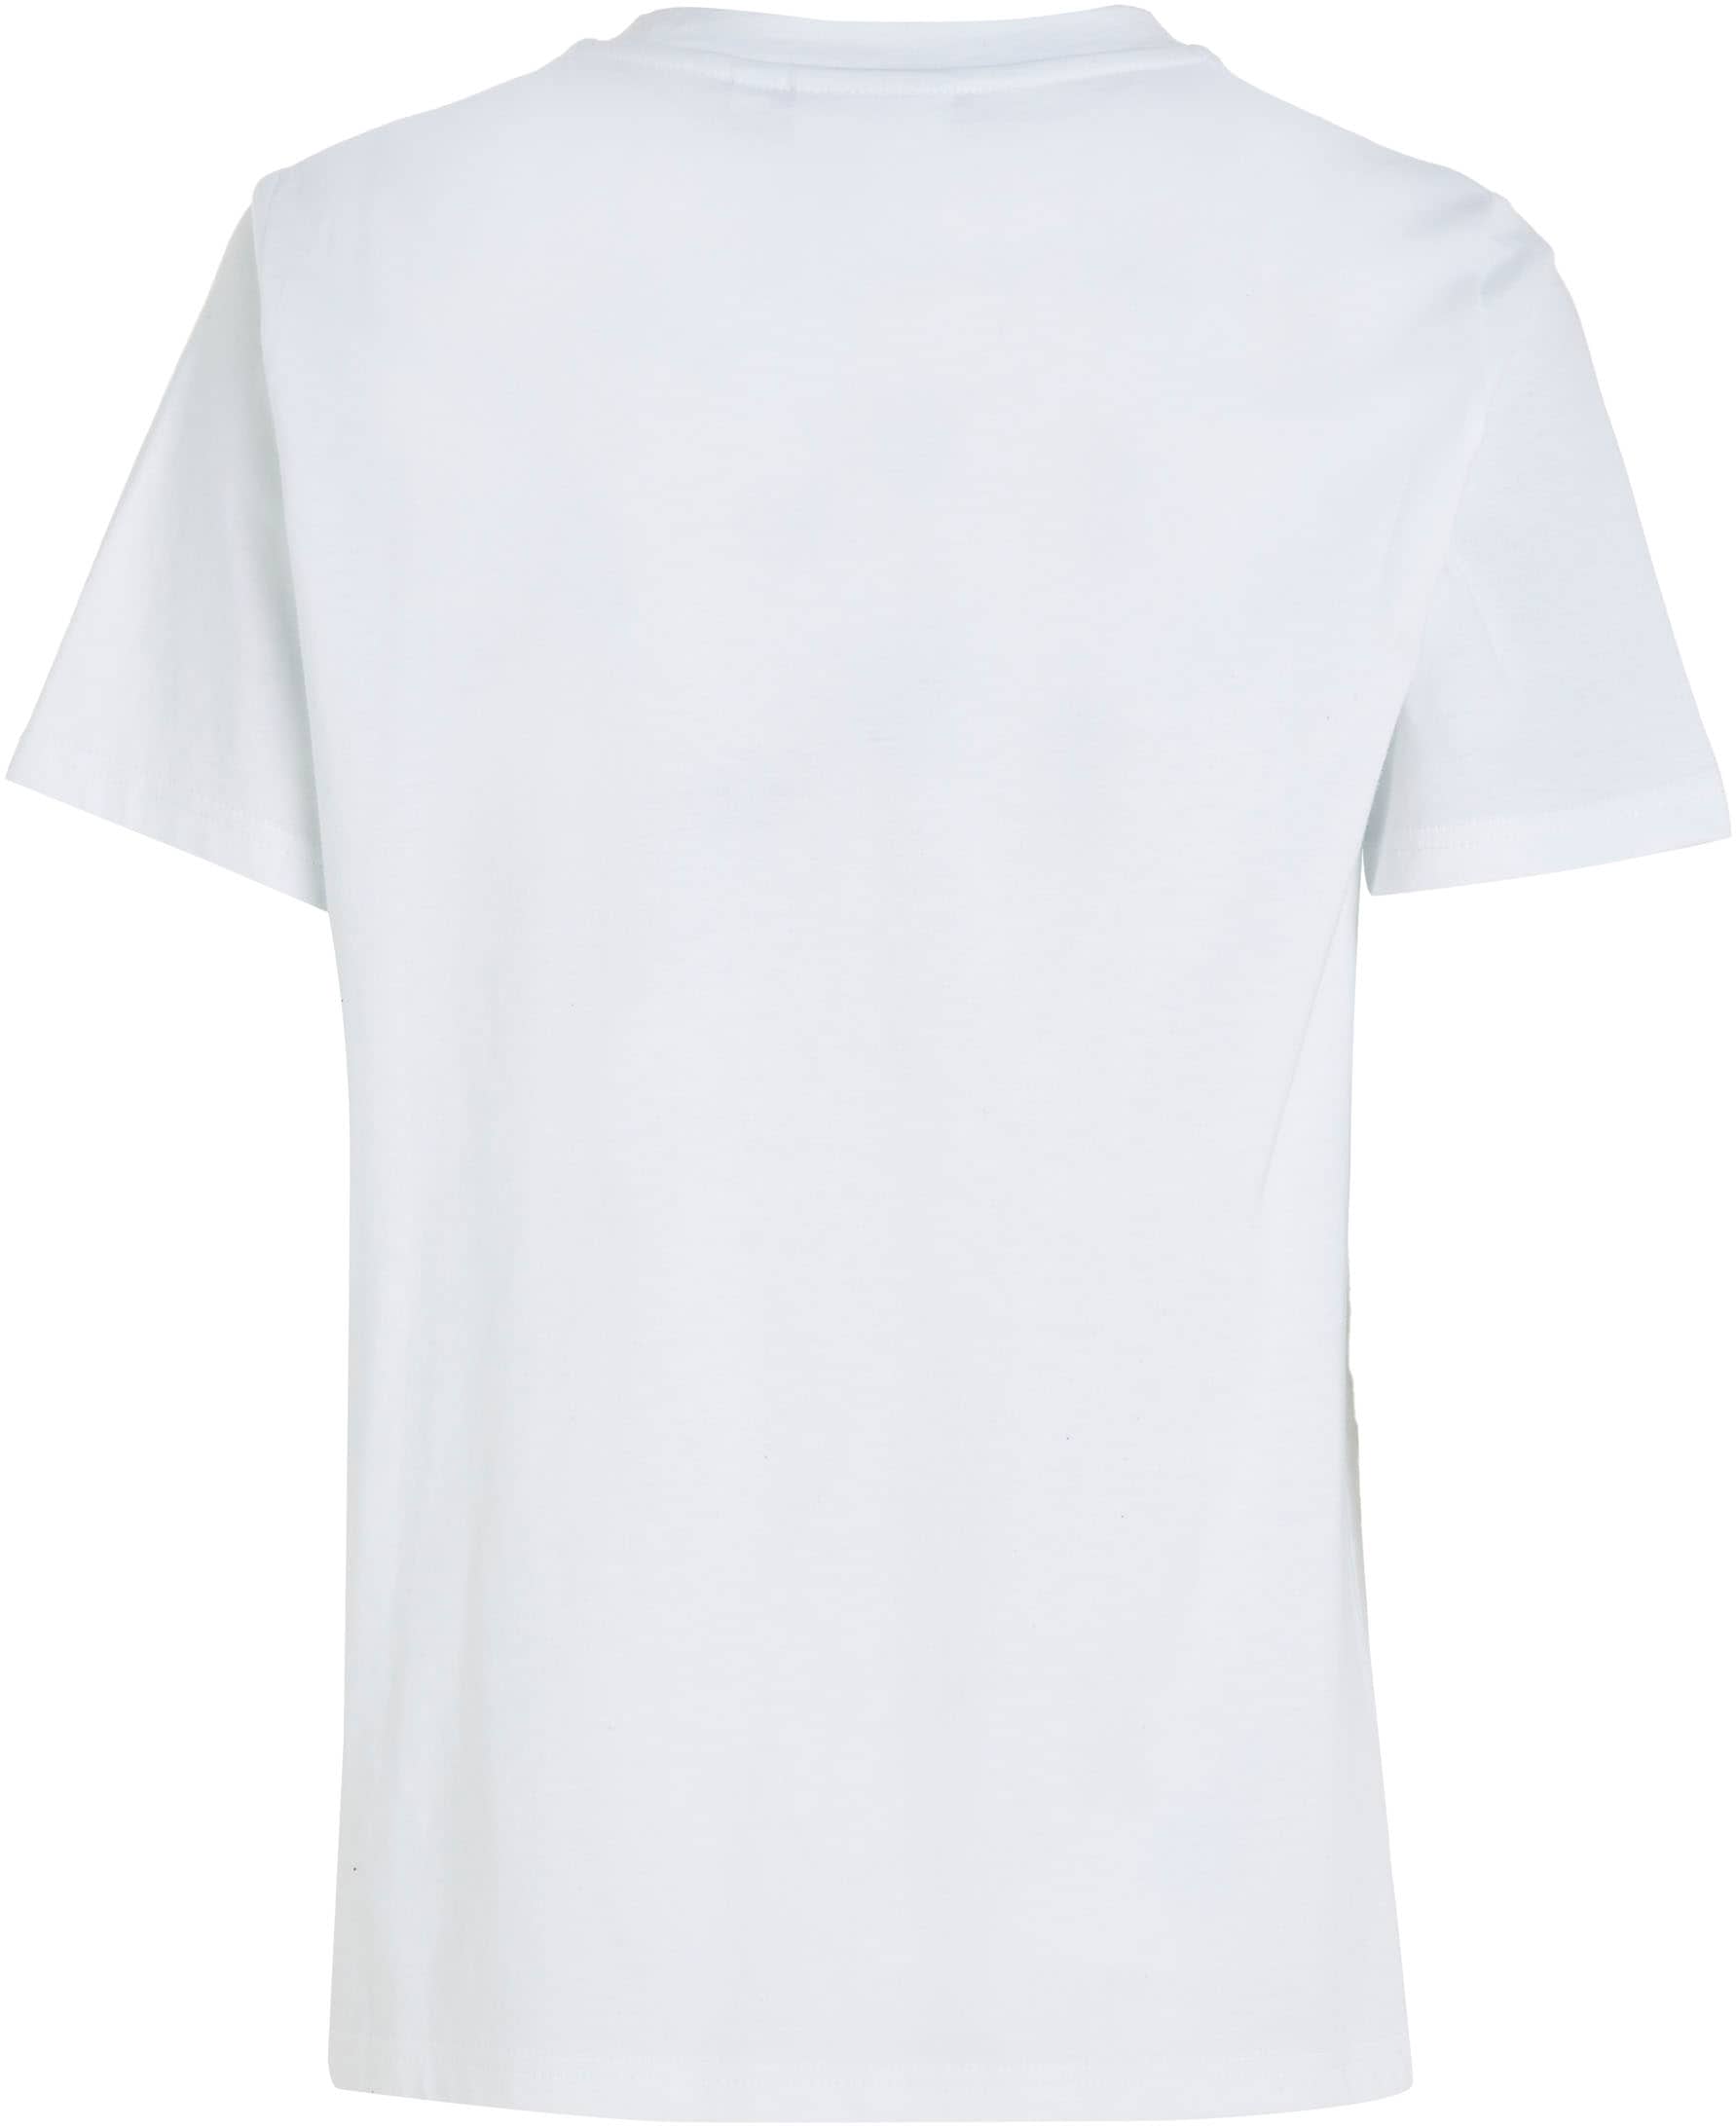 Calvin mit Floral-Printmuster T-Shirt, Acheter Klein confortablement